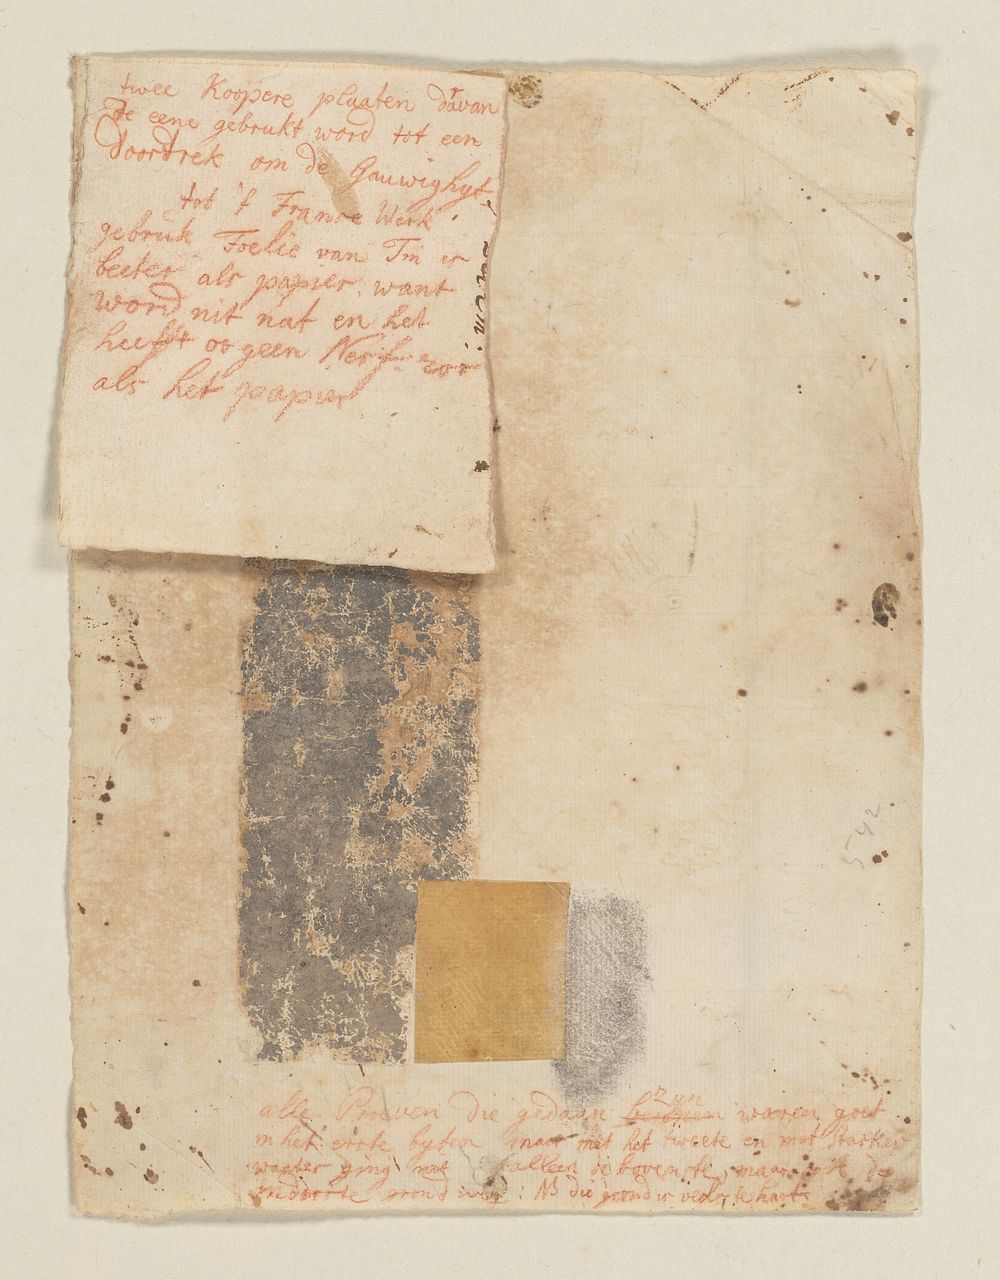 Proef van grafische techniek met verklarende tekst (1736 - 1798) by Cornelis Ploos van Amstel